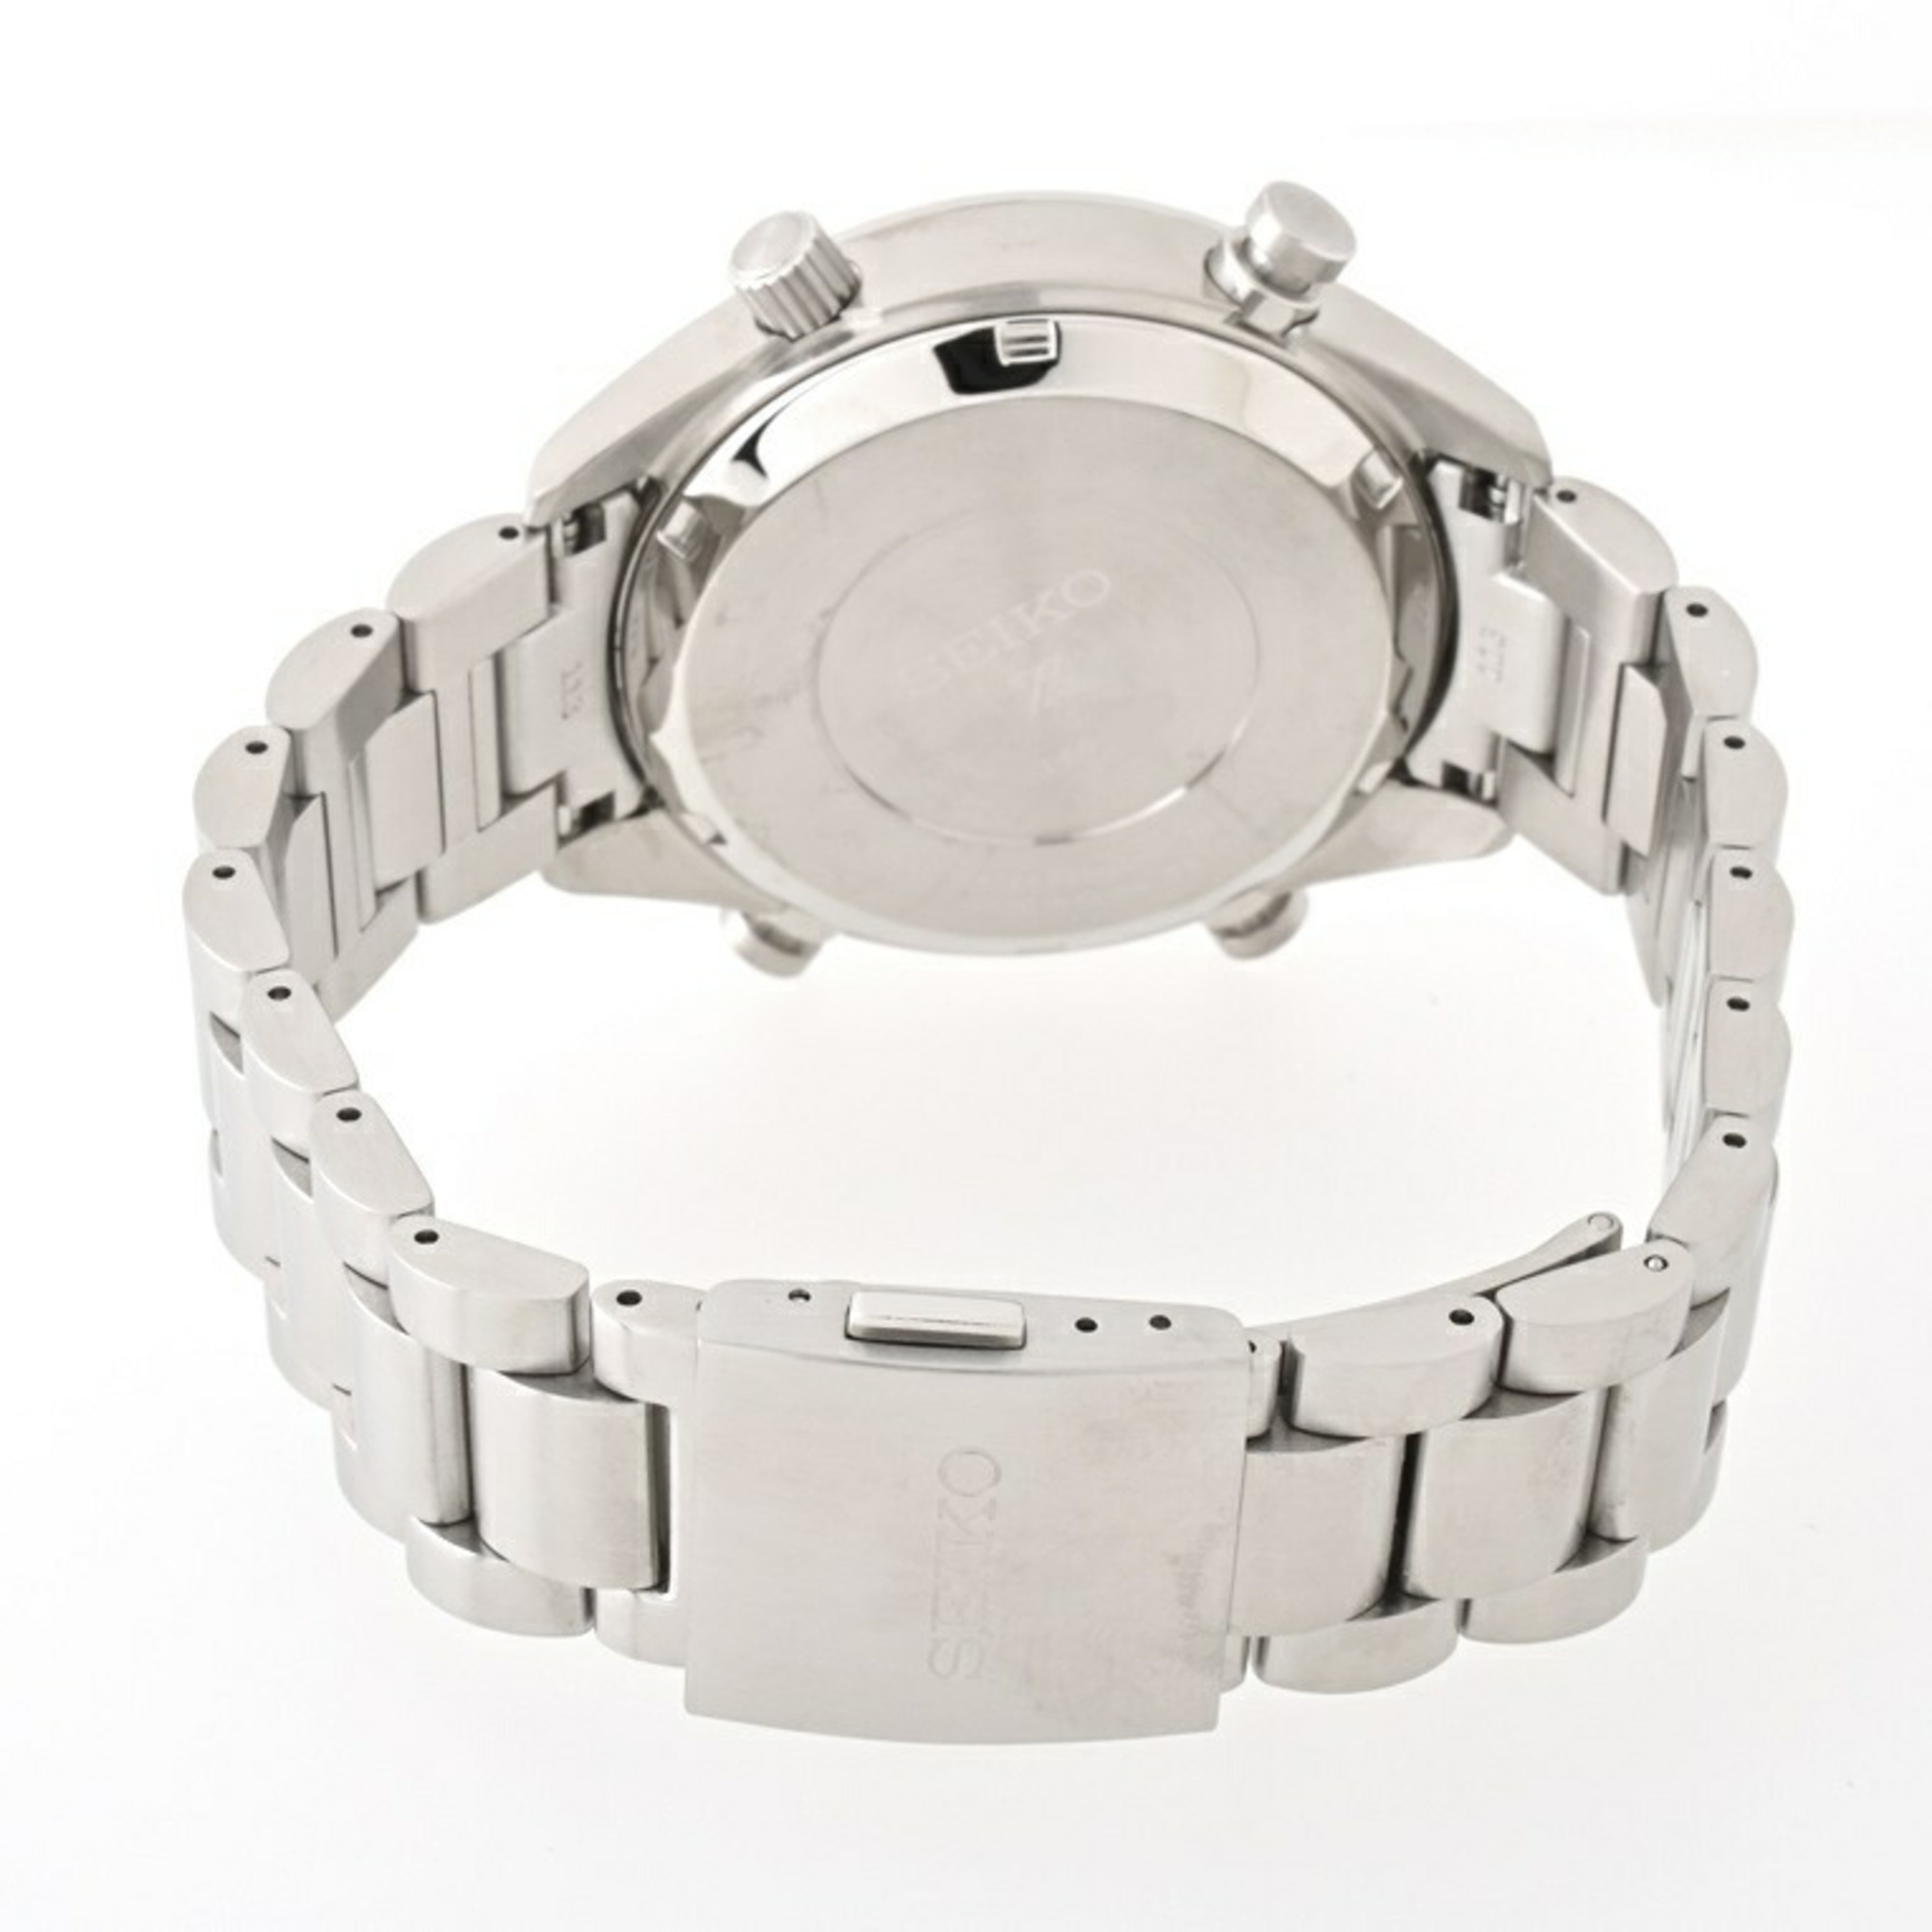 SEIKO PROSPEX Speed Timer Watch SBER001 8A50-00A0 Quartz Solar A-155201